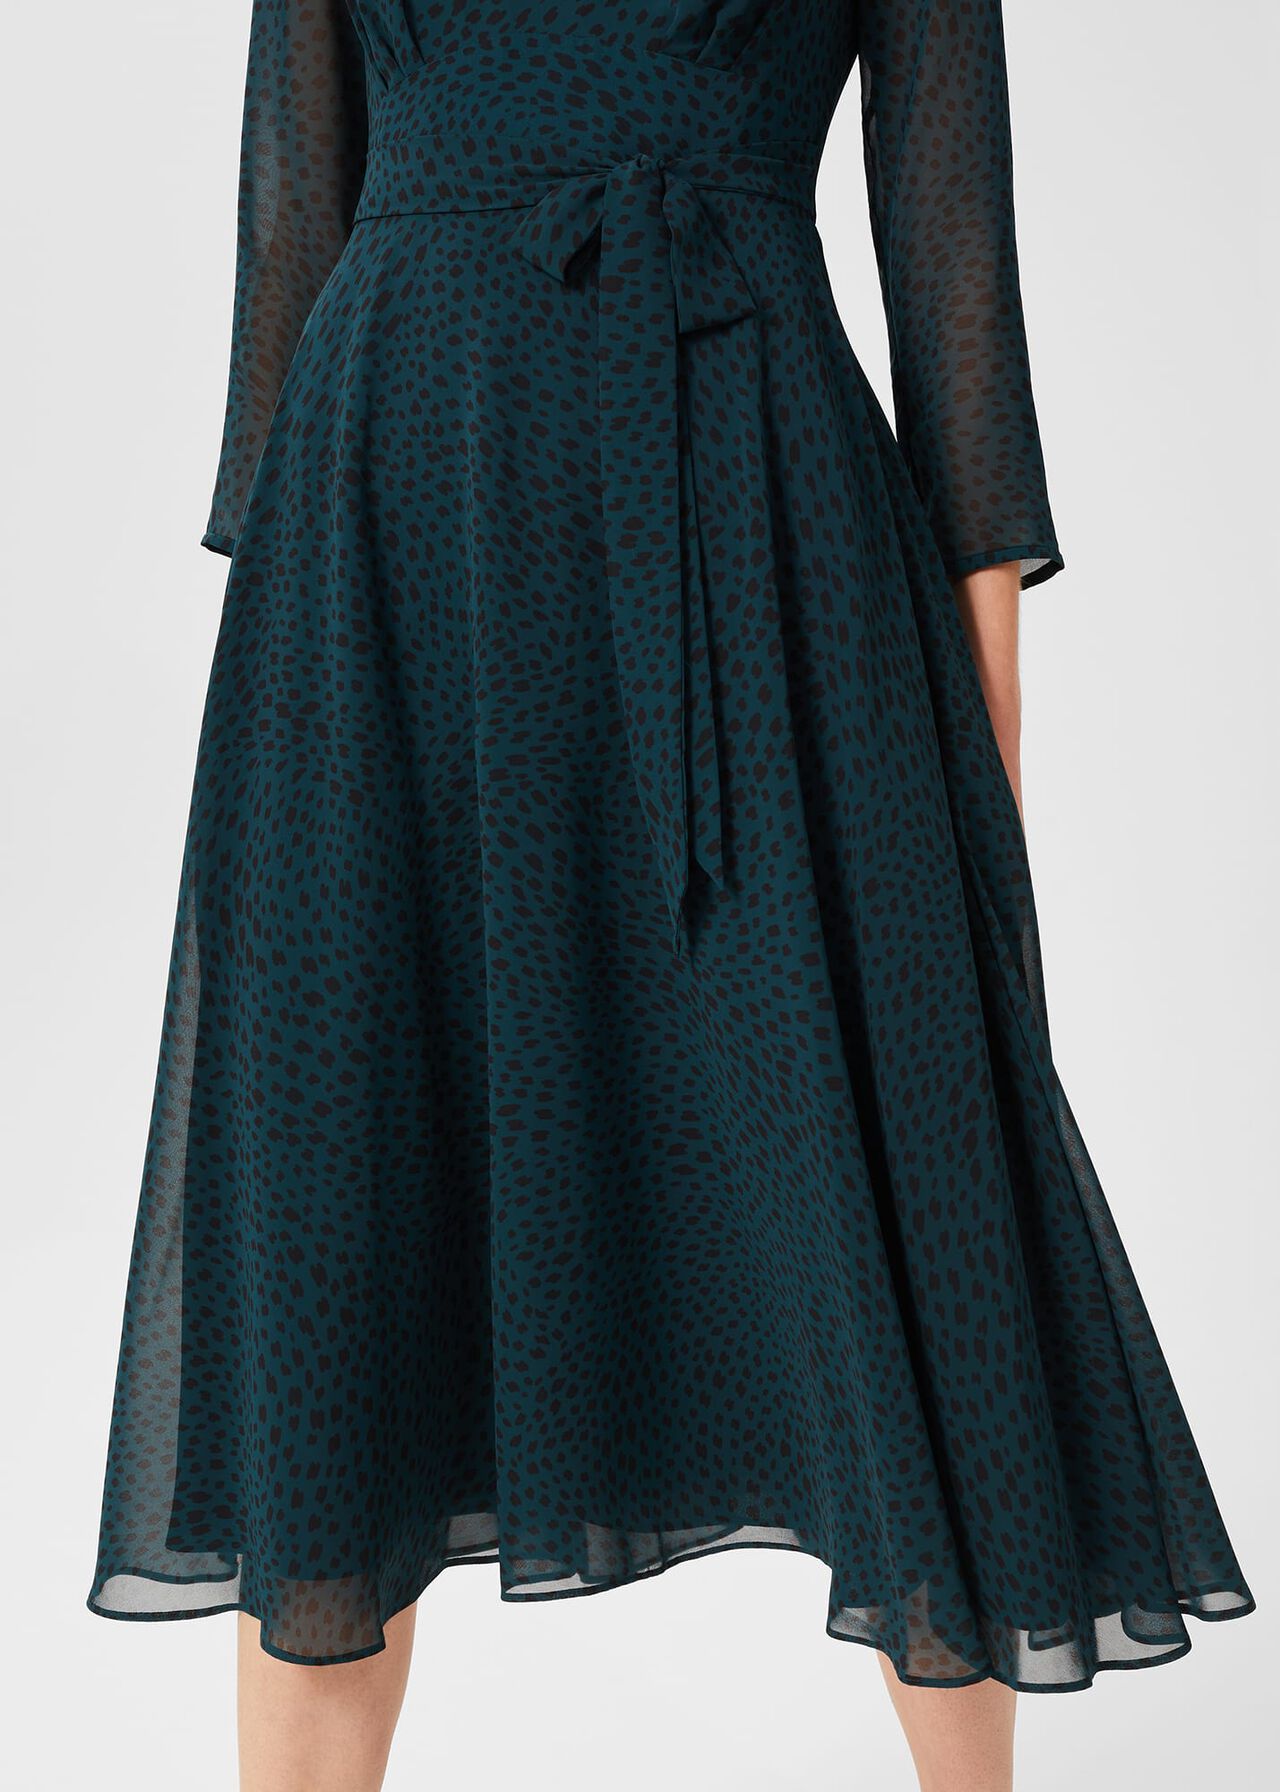 Mimi Printed Dress, Pine Green, hi-res